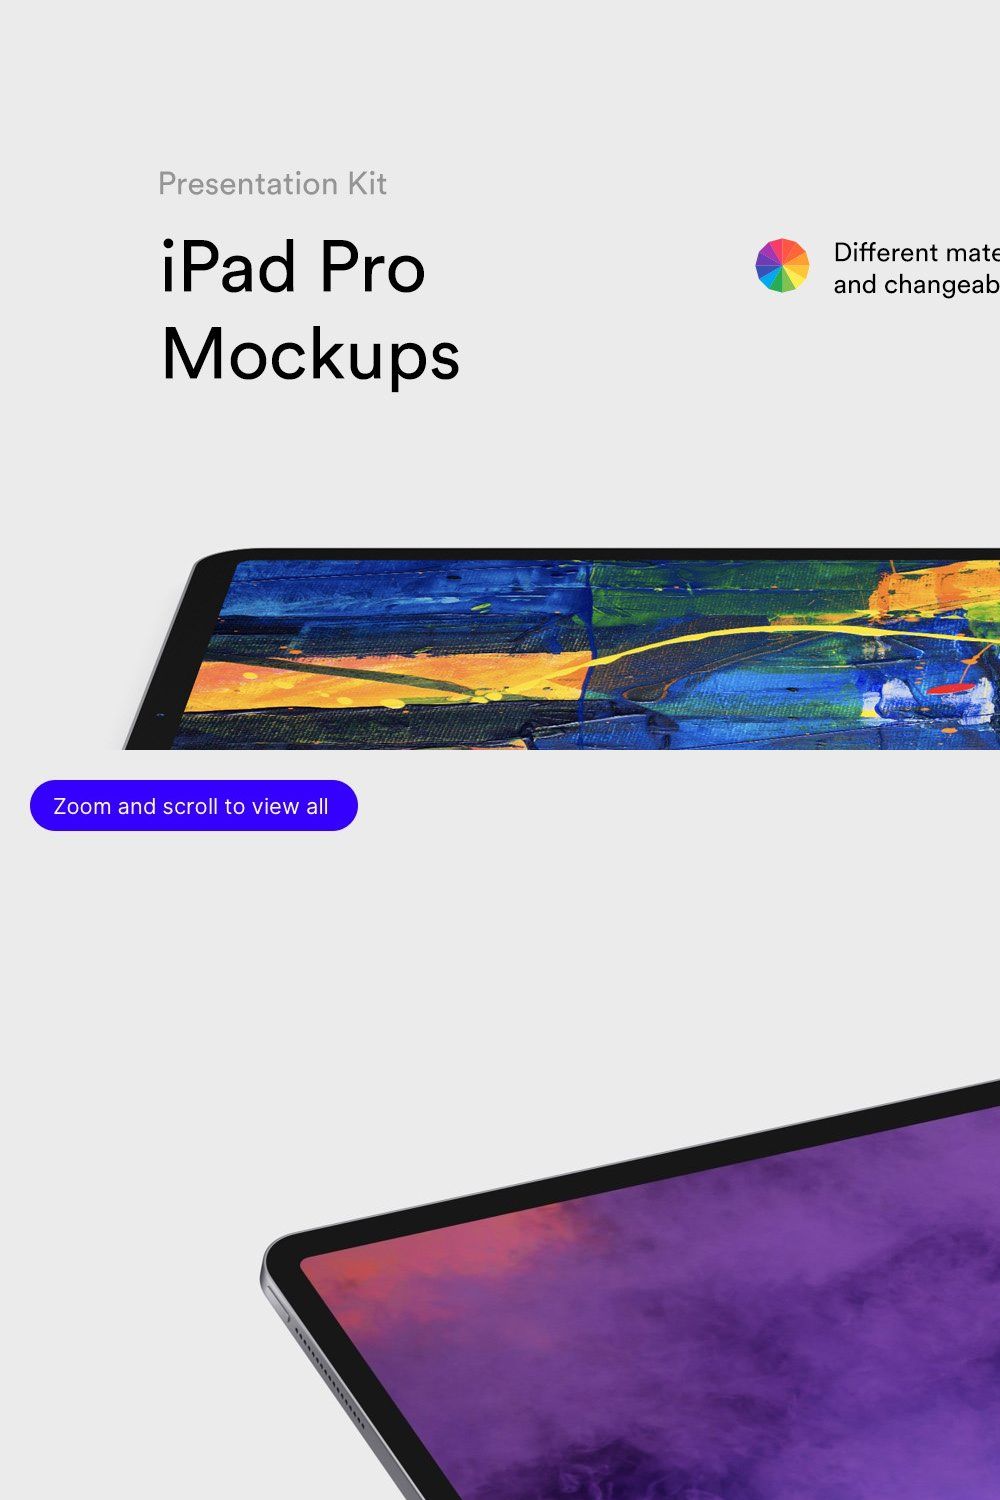 iPad Pro Mockups (2018) | PK pinterest preview image.